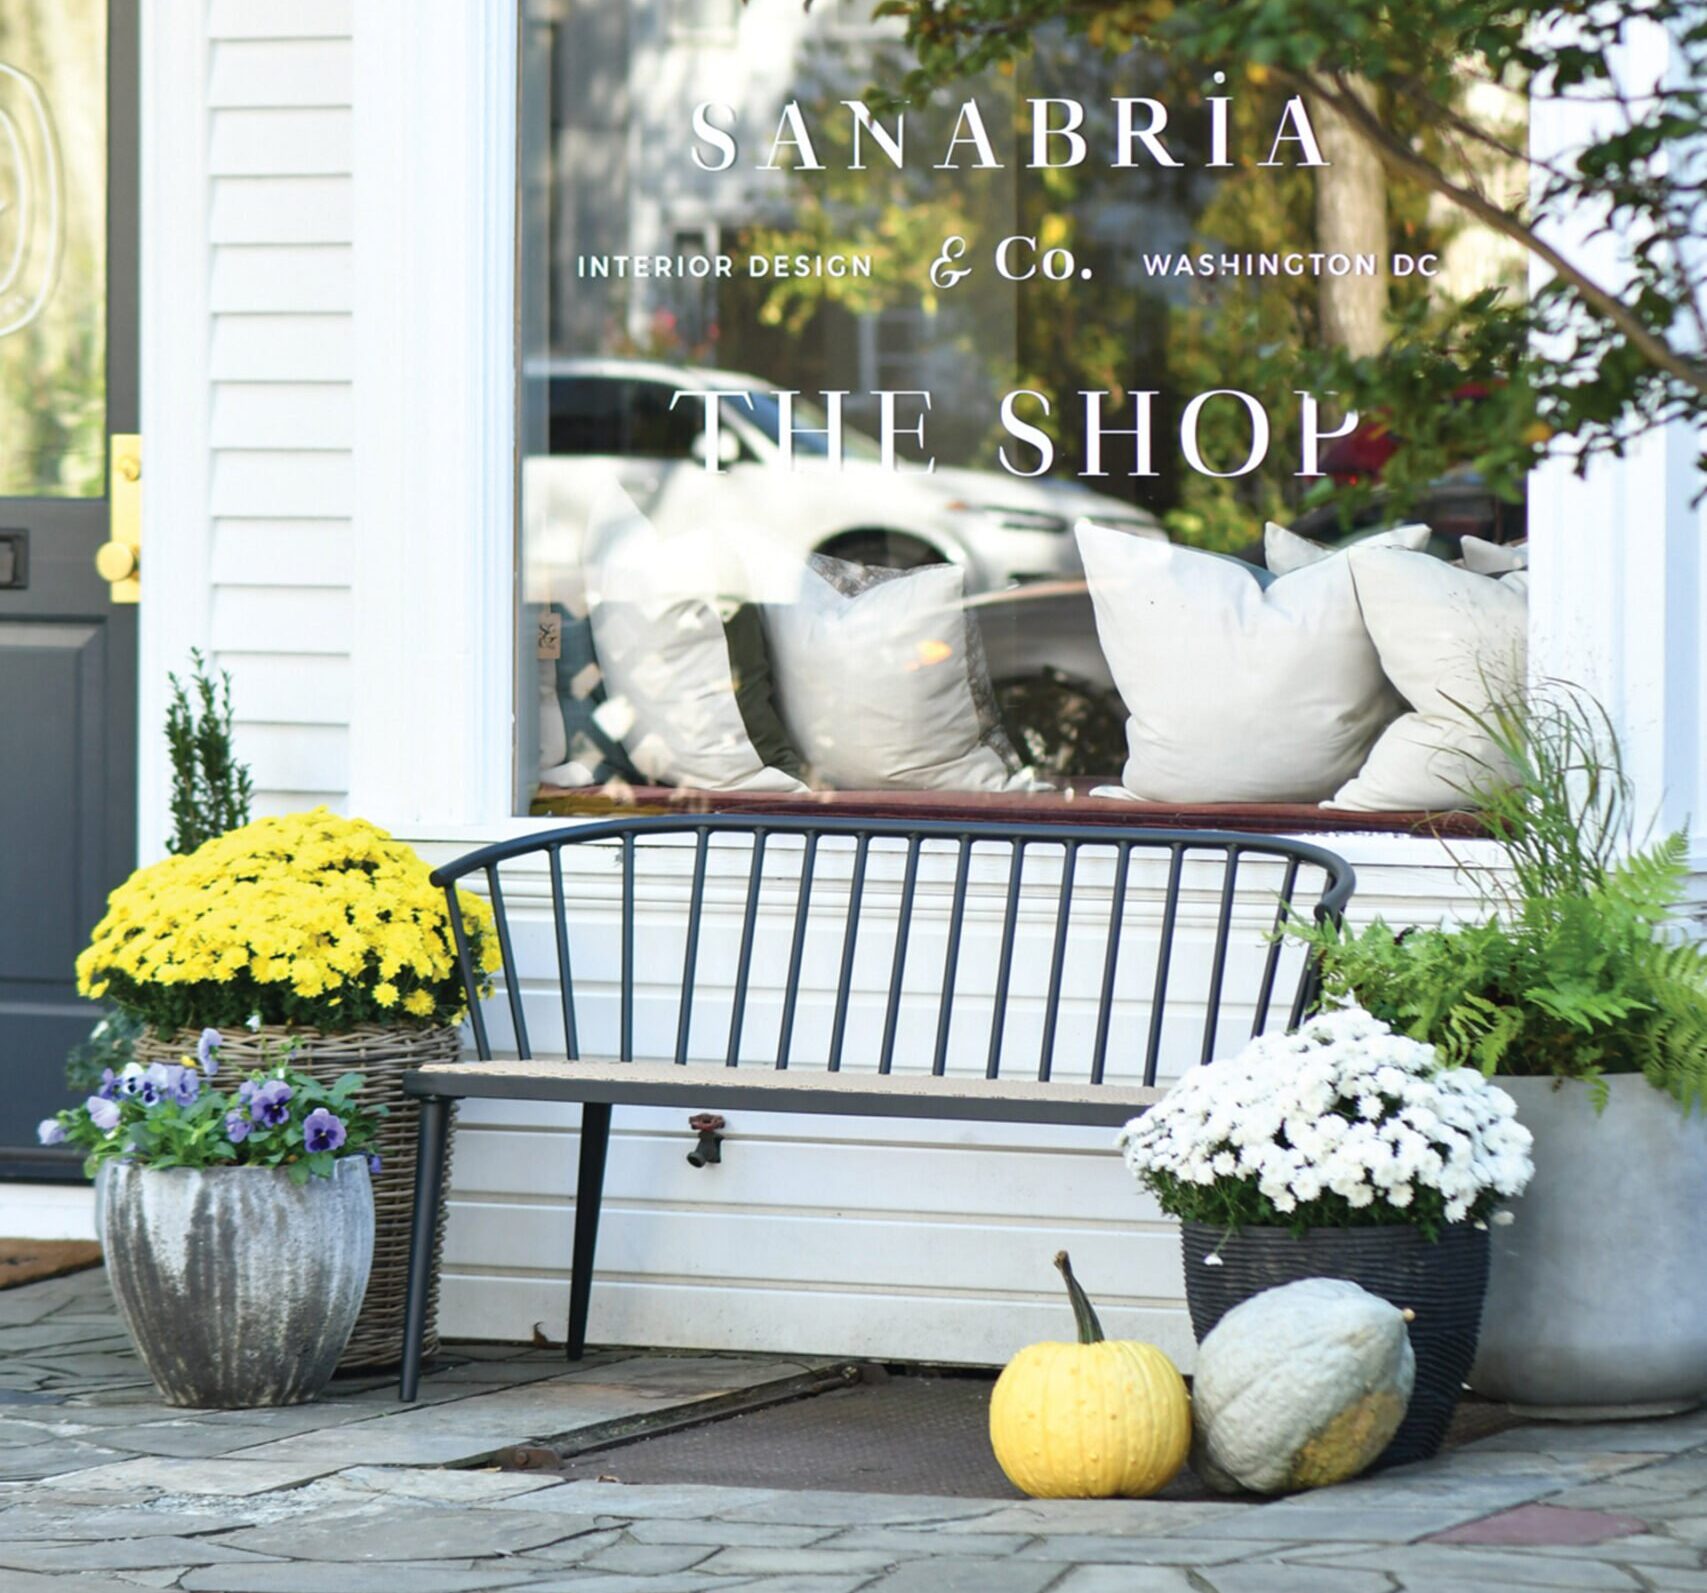 Designer Melissa Sanabria plans to host artist talks at Sanabria & Co., The Shop.